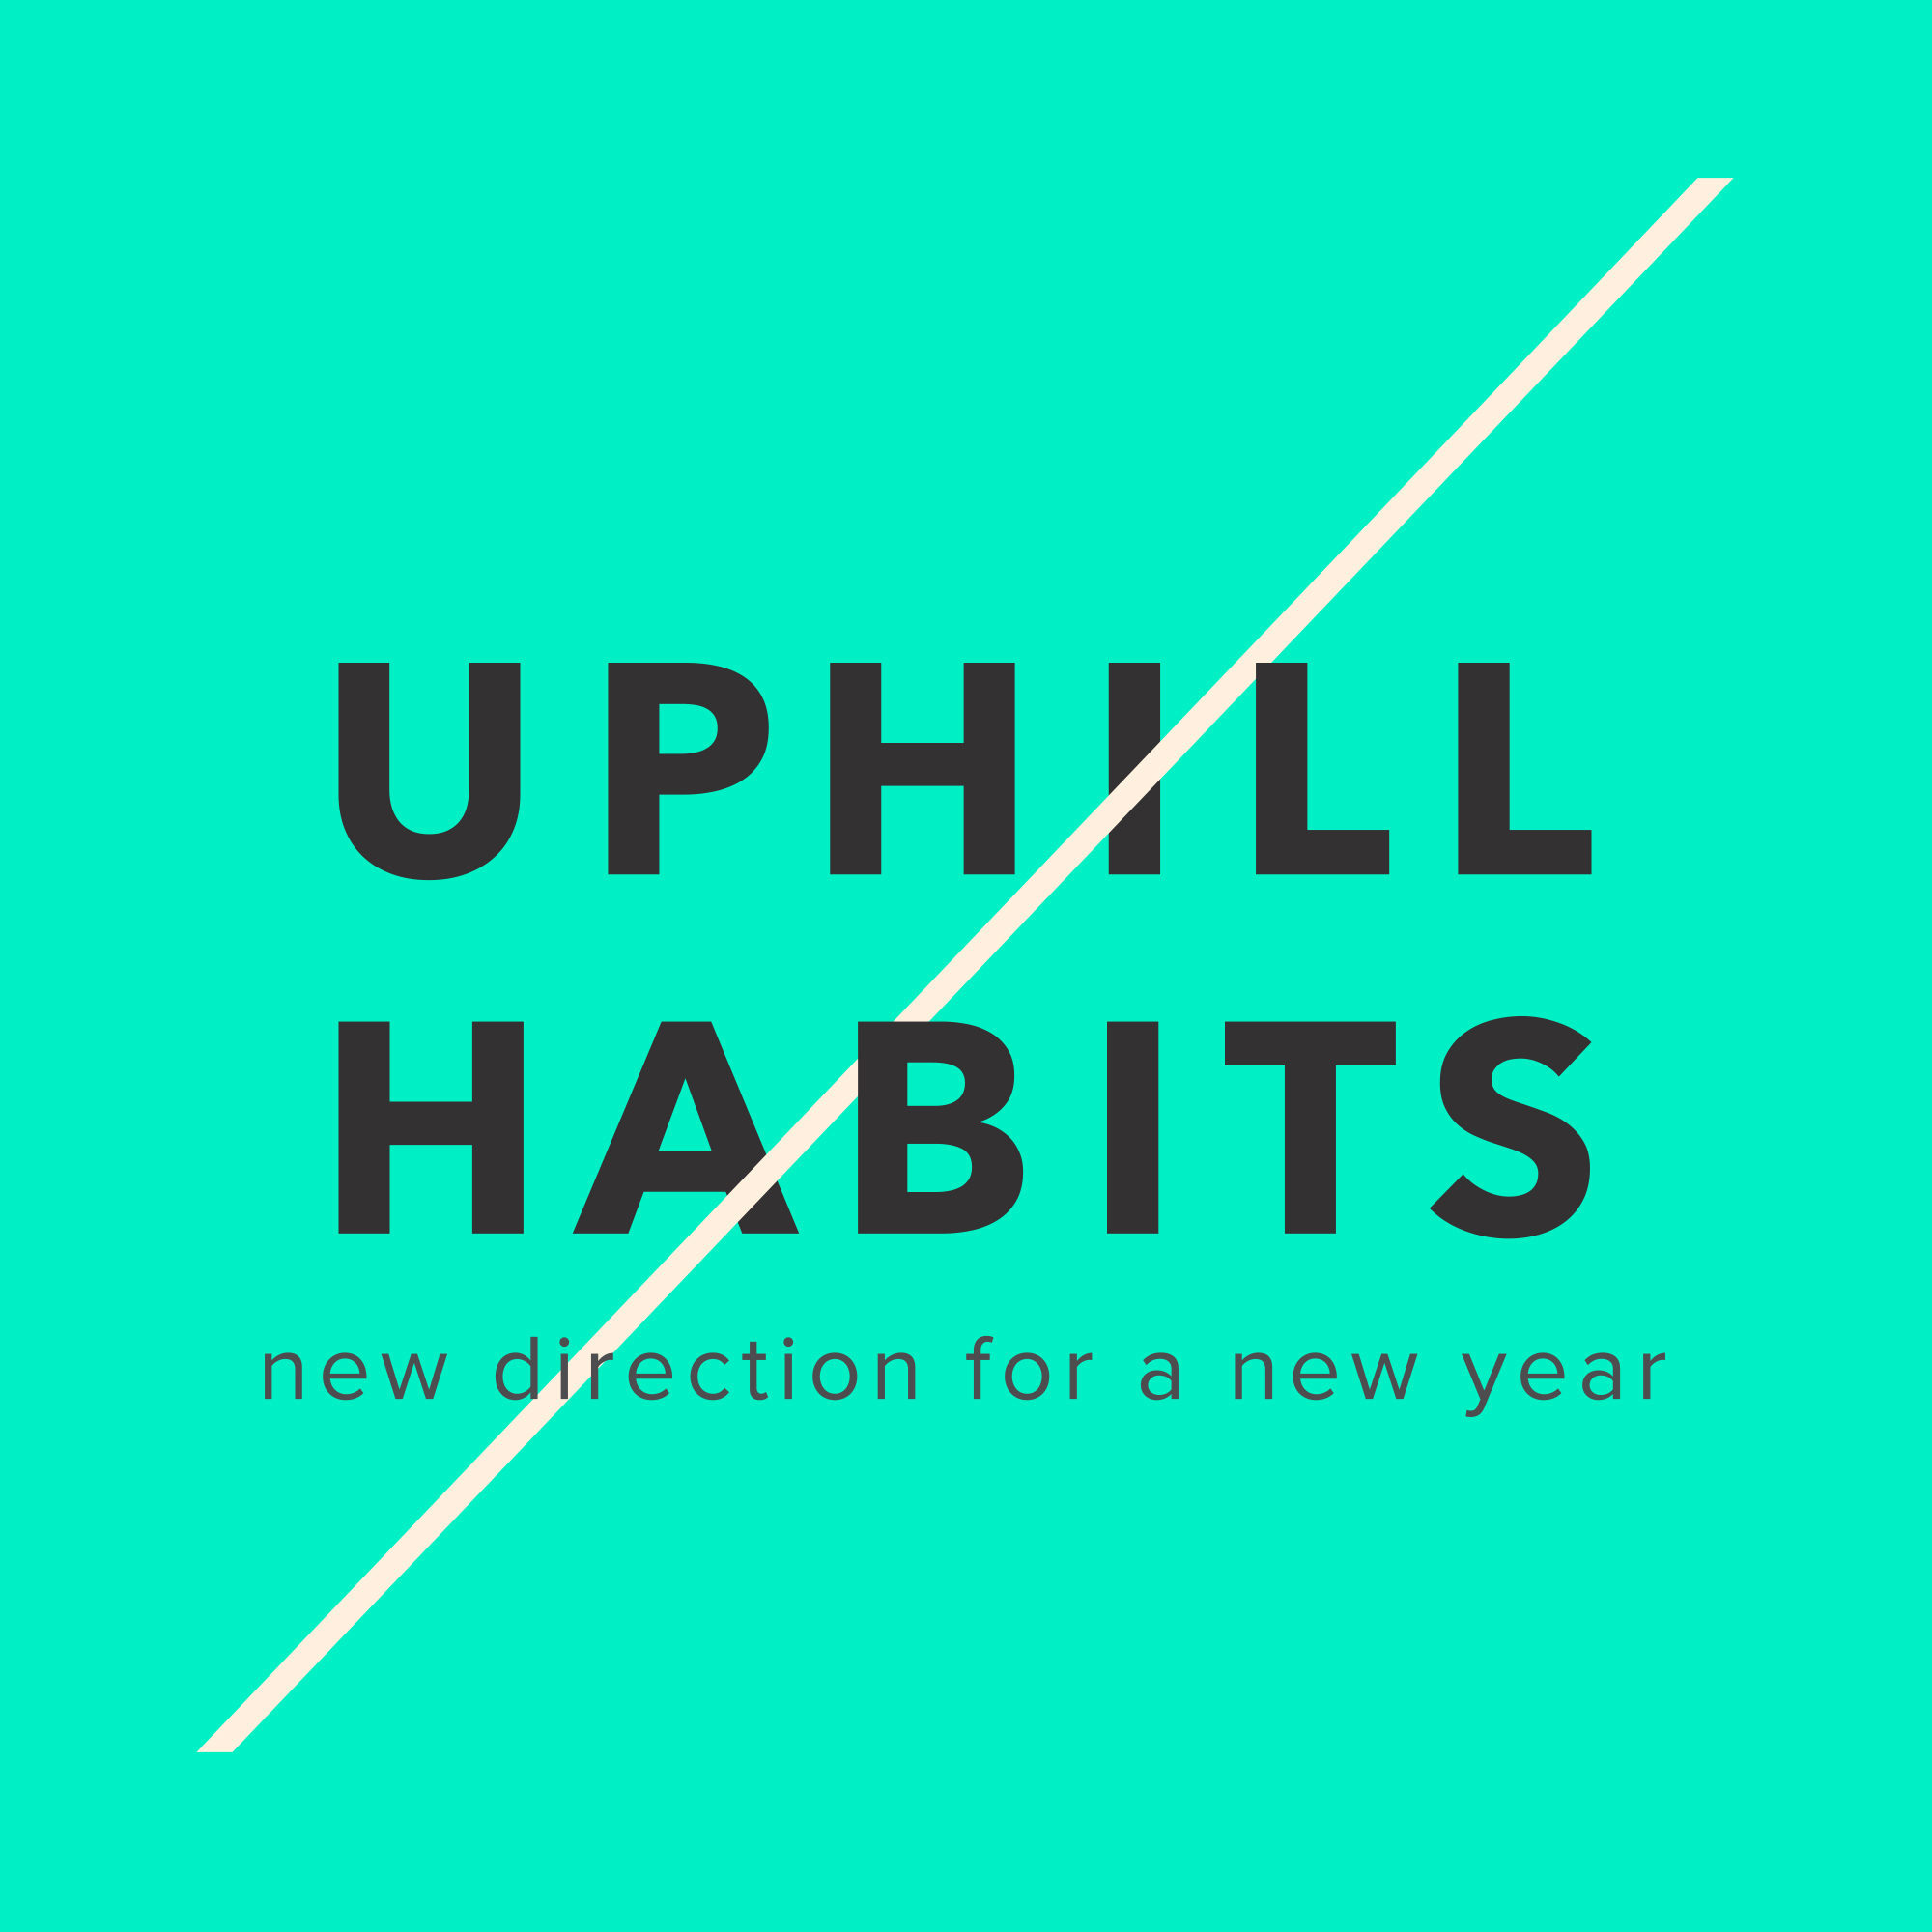 01-28-18 Uphill Habits Series Habit #4